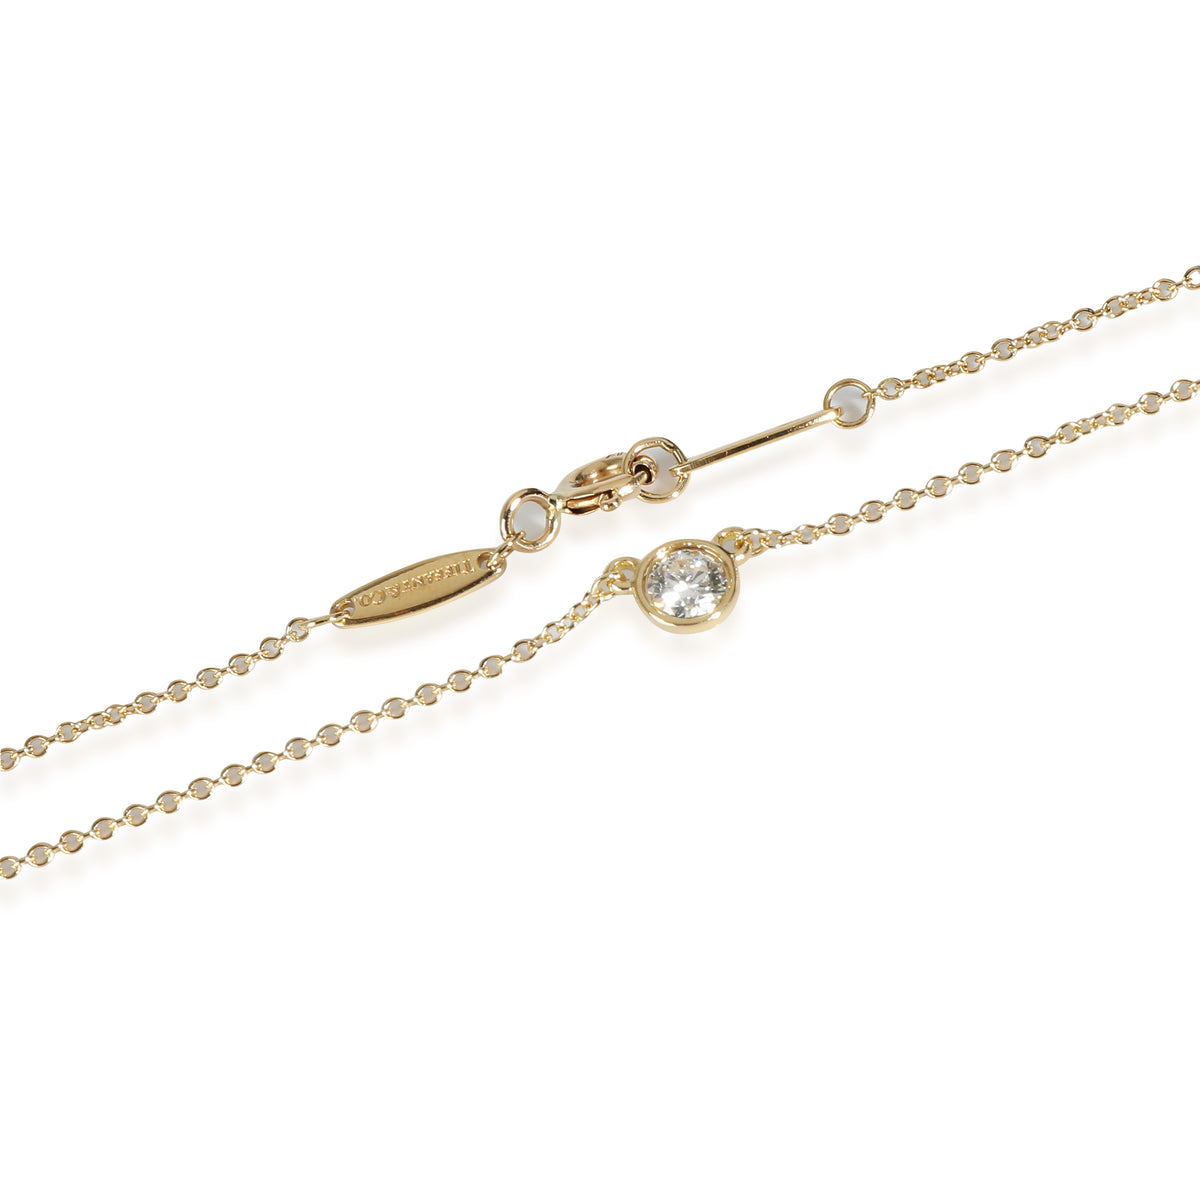 Elsa Peretti Fashion Necklace in 18k Yellow Gold 0.14 CTW